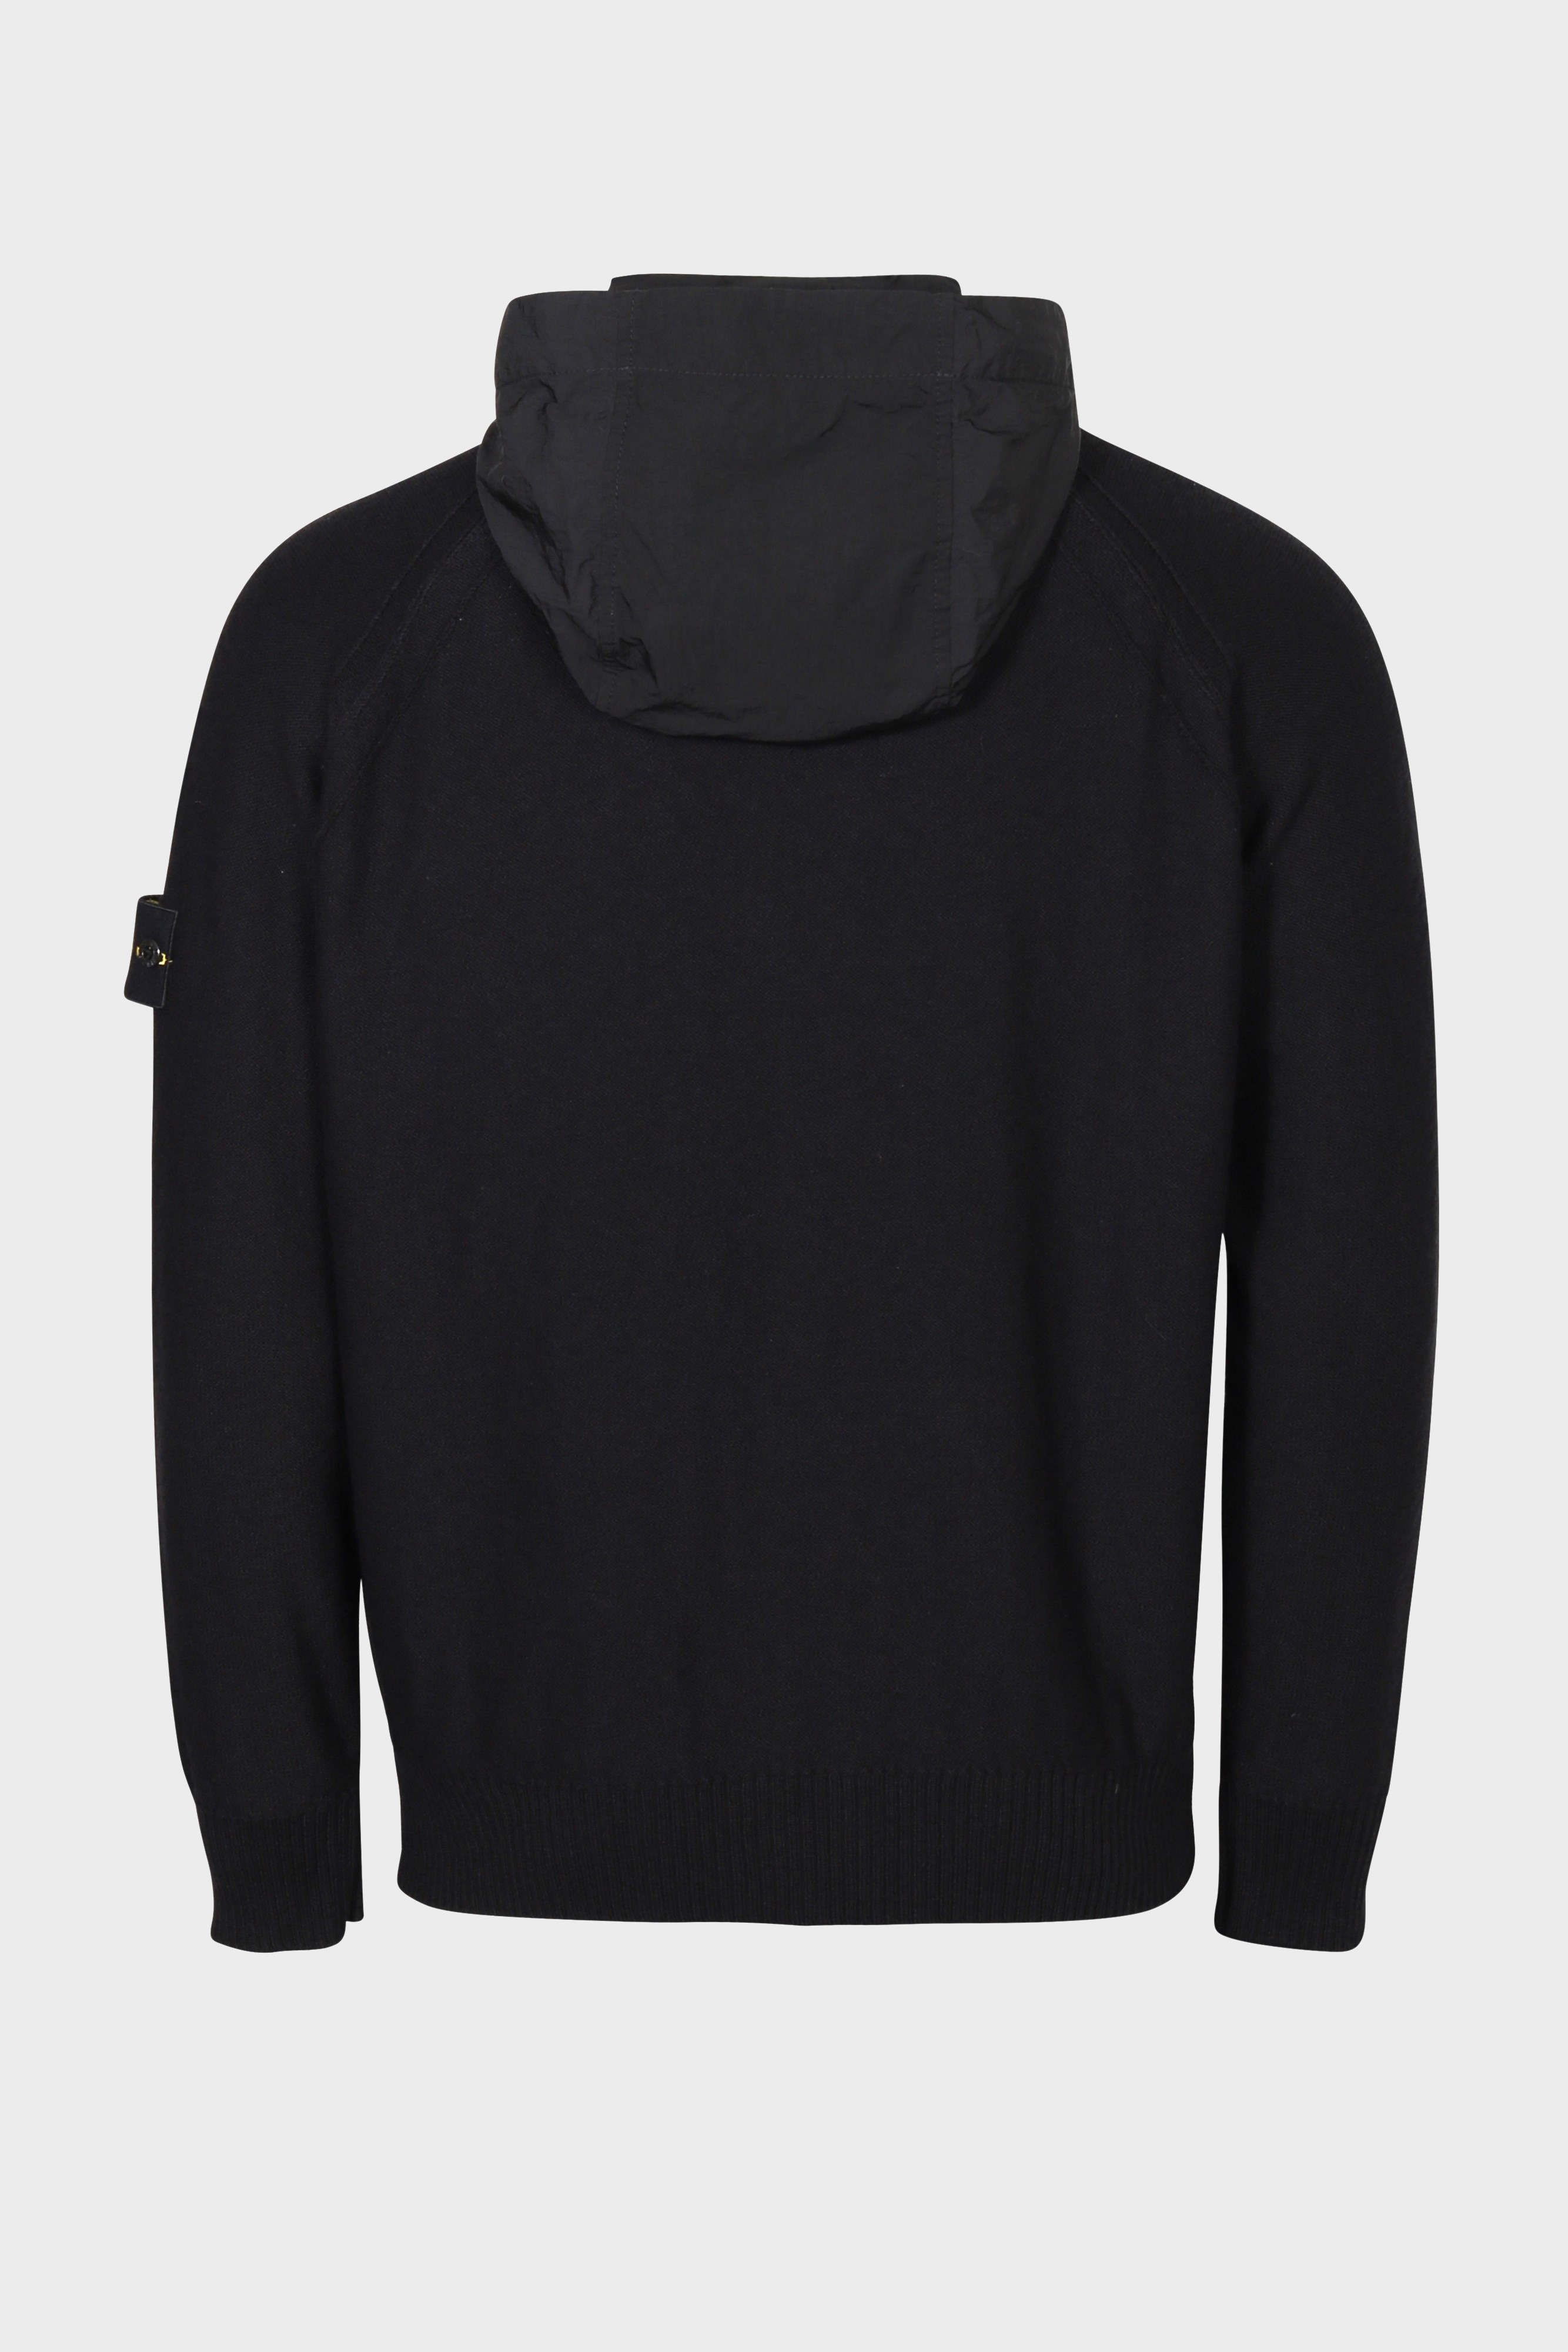 STONE ISLAND Nylon Hooded Knit Jacket in Black M